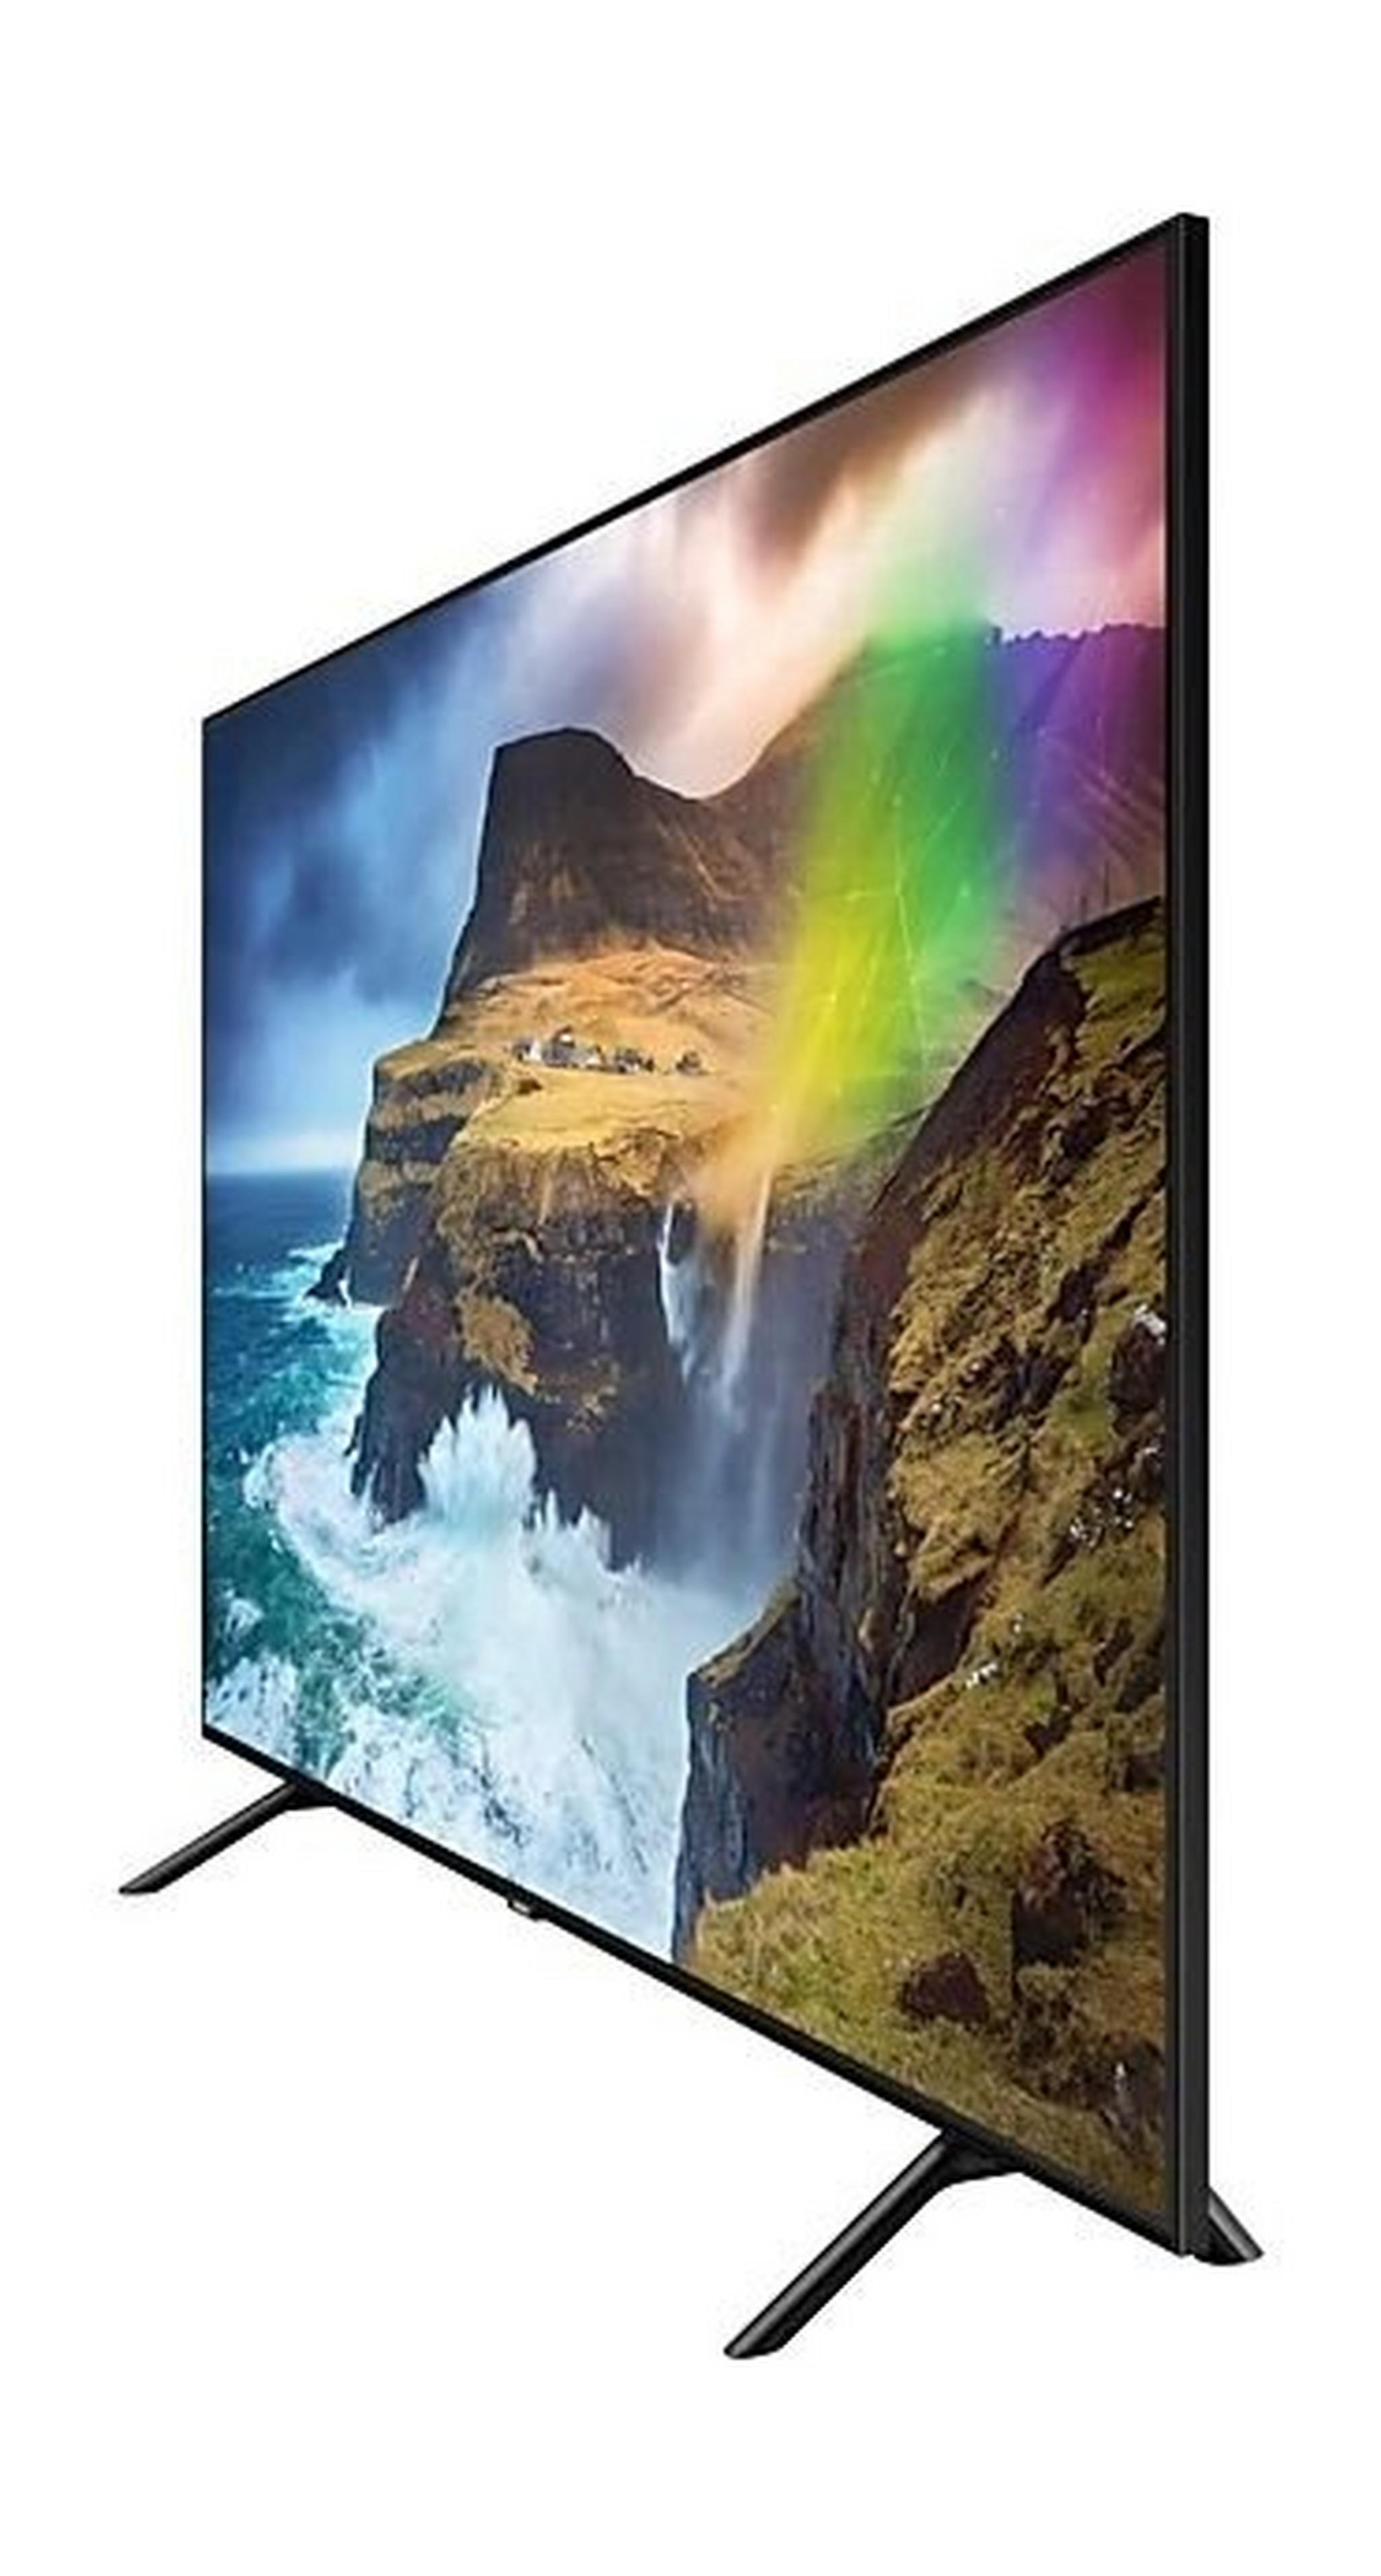 Samsung TV Q70R 55 inch Ultra HD Smart LED - QA55Q70R